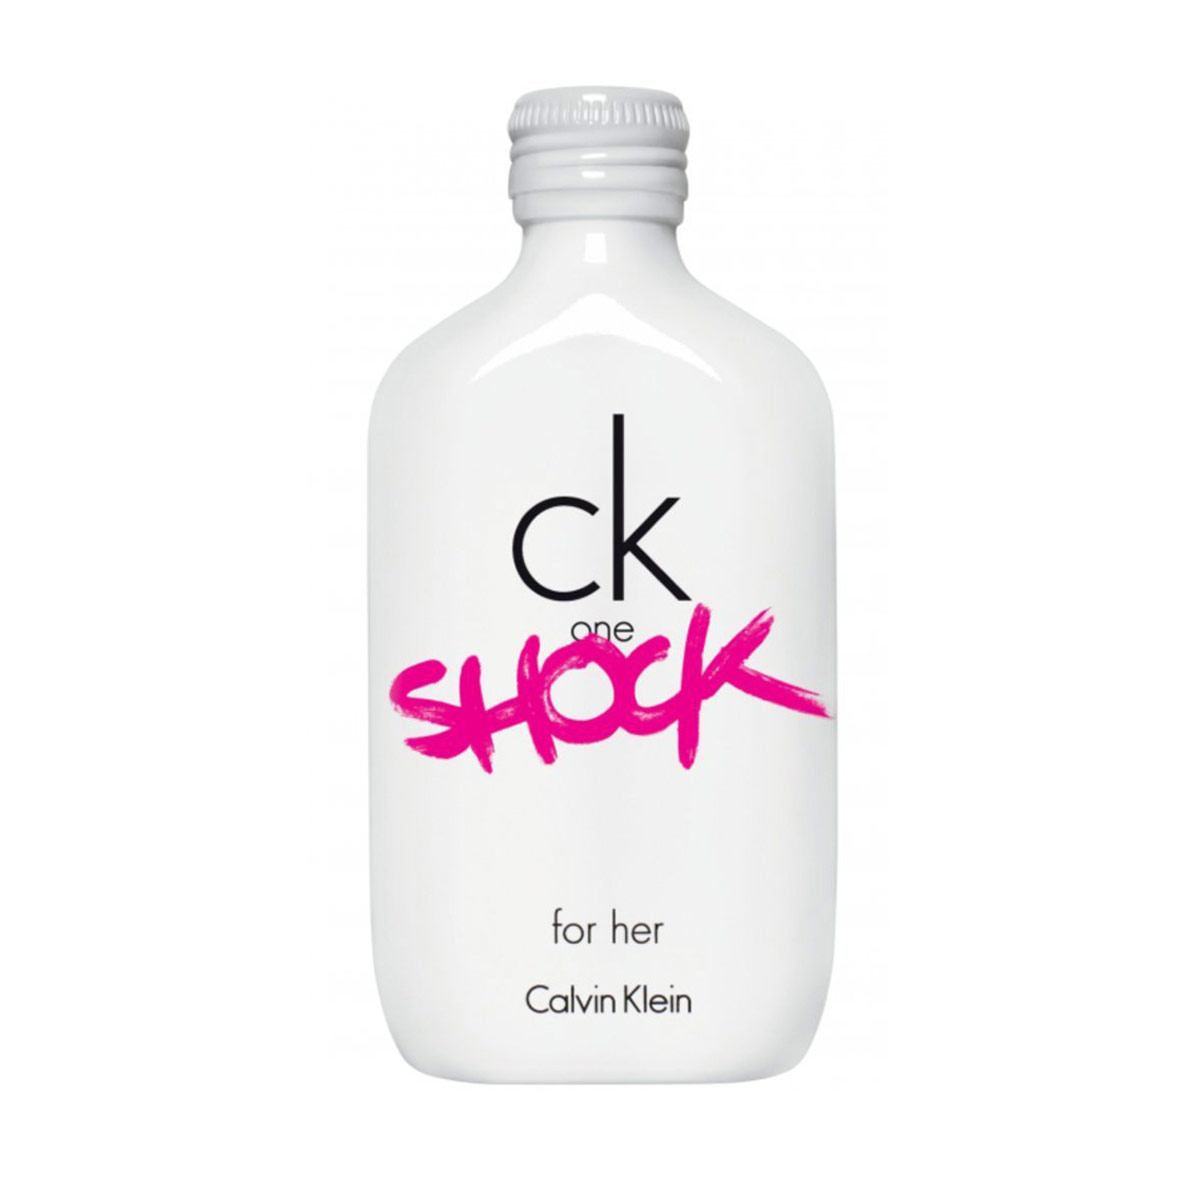 https://scentfie.com/wp-content/uploads/2019/02/Calvin-Klein-CK-One-Shock-for-Her-100ml.jpg